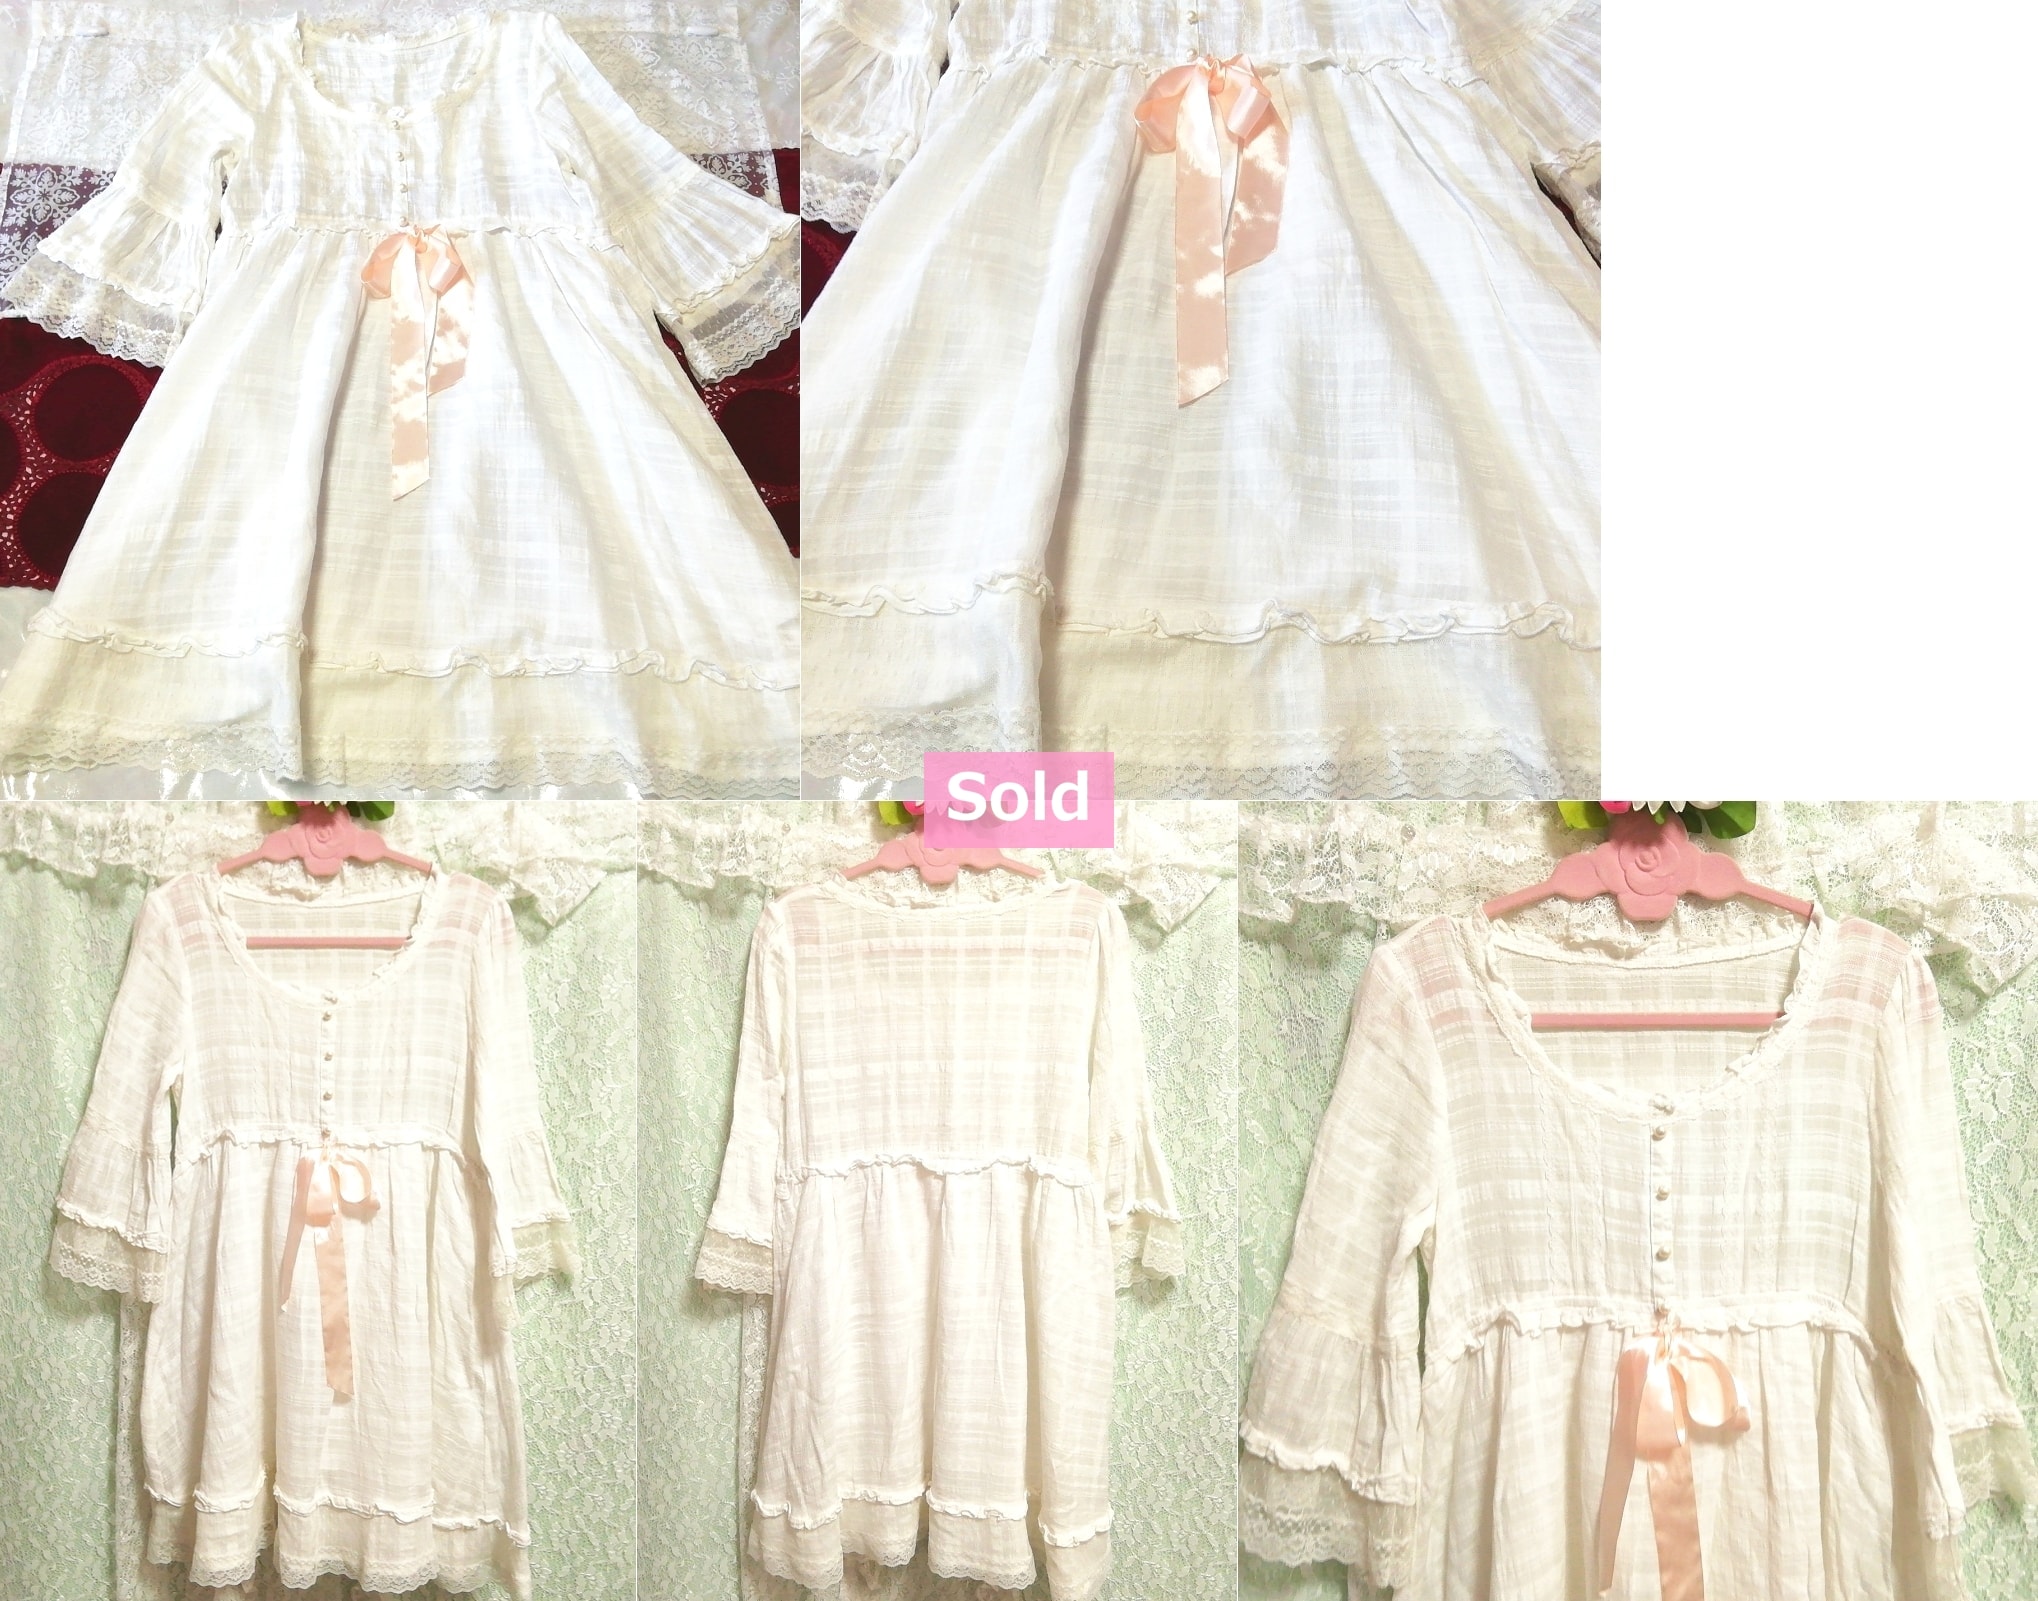 Vestido camisón negligee túnica de algodón blanco de manga larga con cinta de raso rosa, sayo, manga larga, talla m